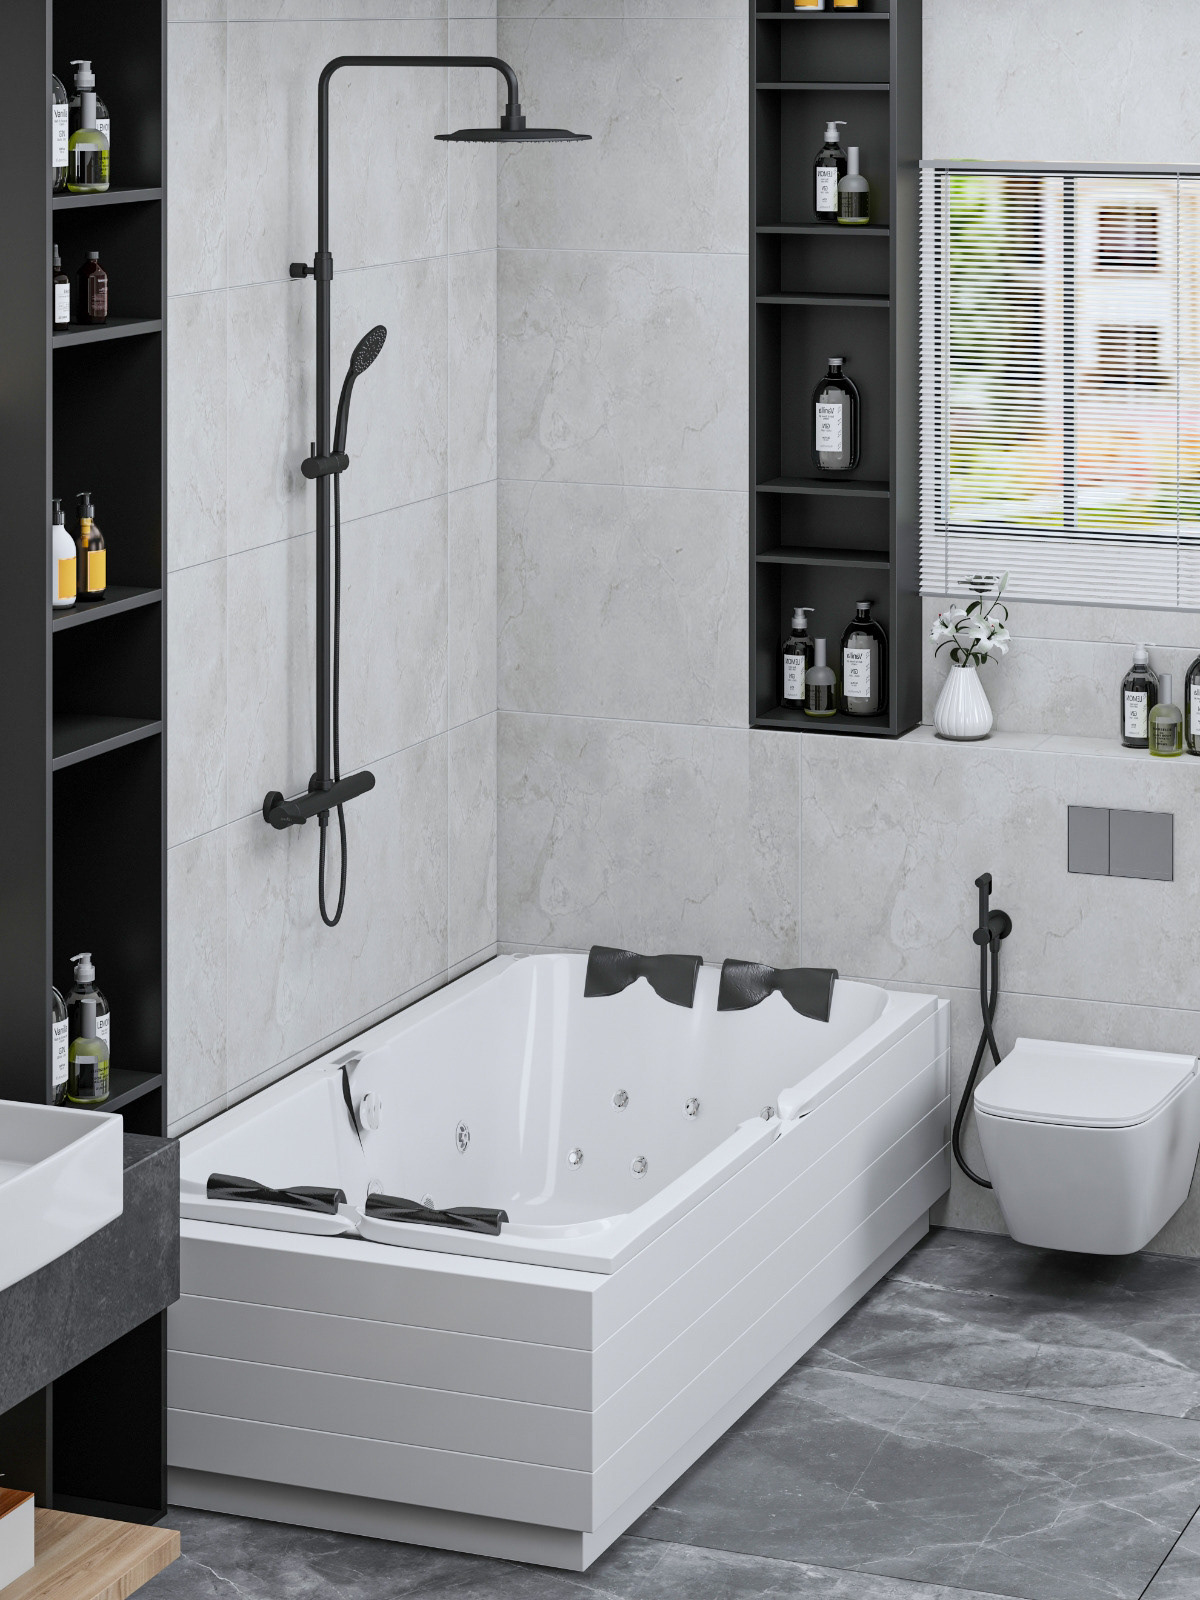 #bathroom #interior #interiorshots #renderings #modern   #minimalism #materials  #architecture #decor